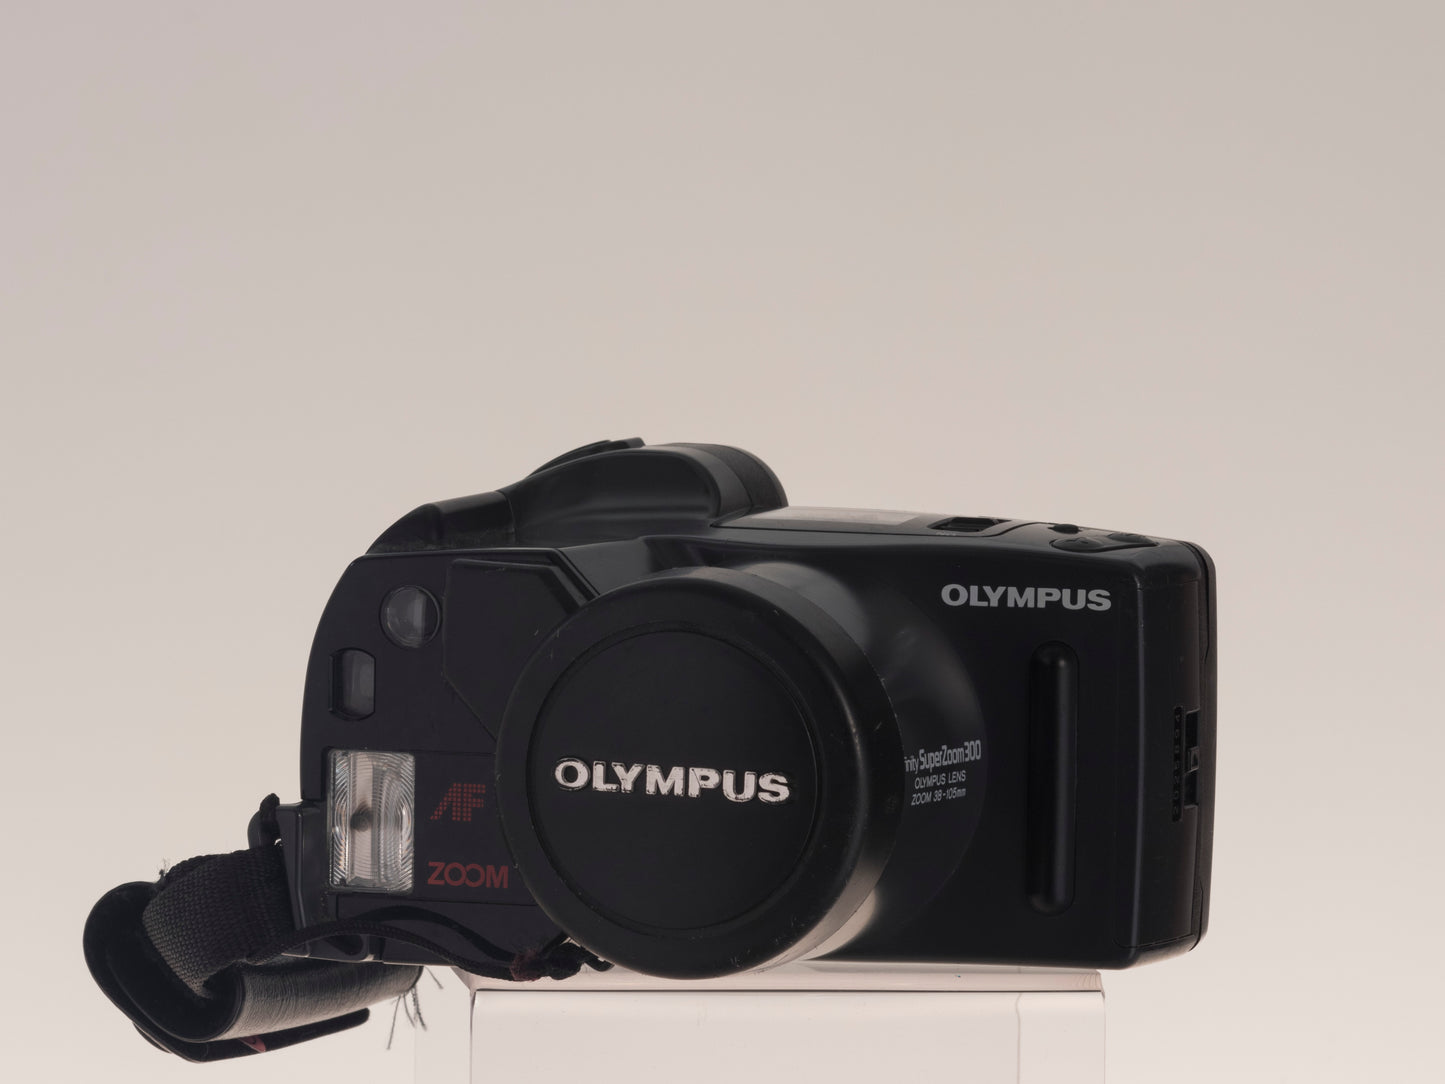 Olympus Superzoom AZ300 35mm film camera